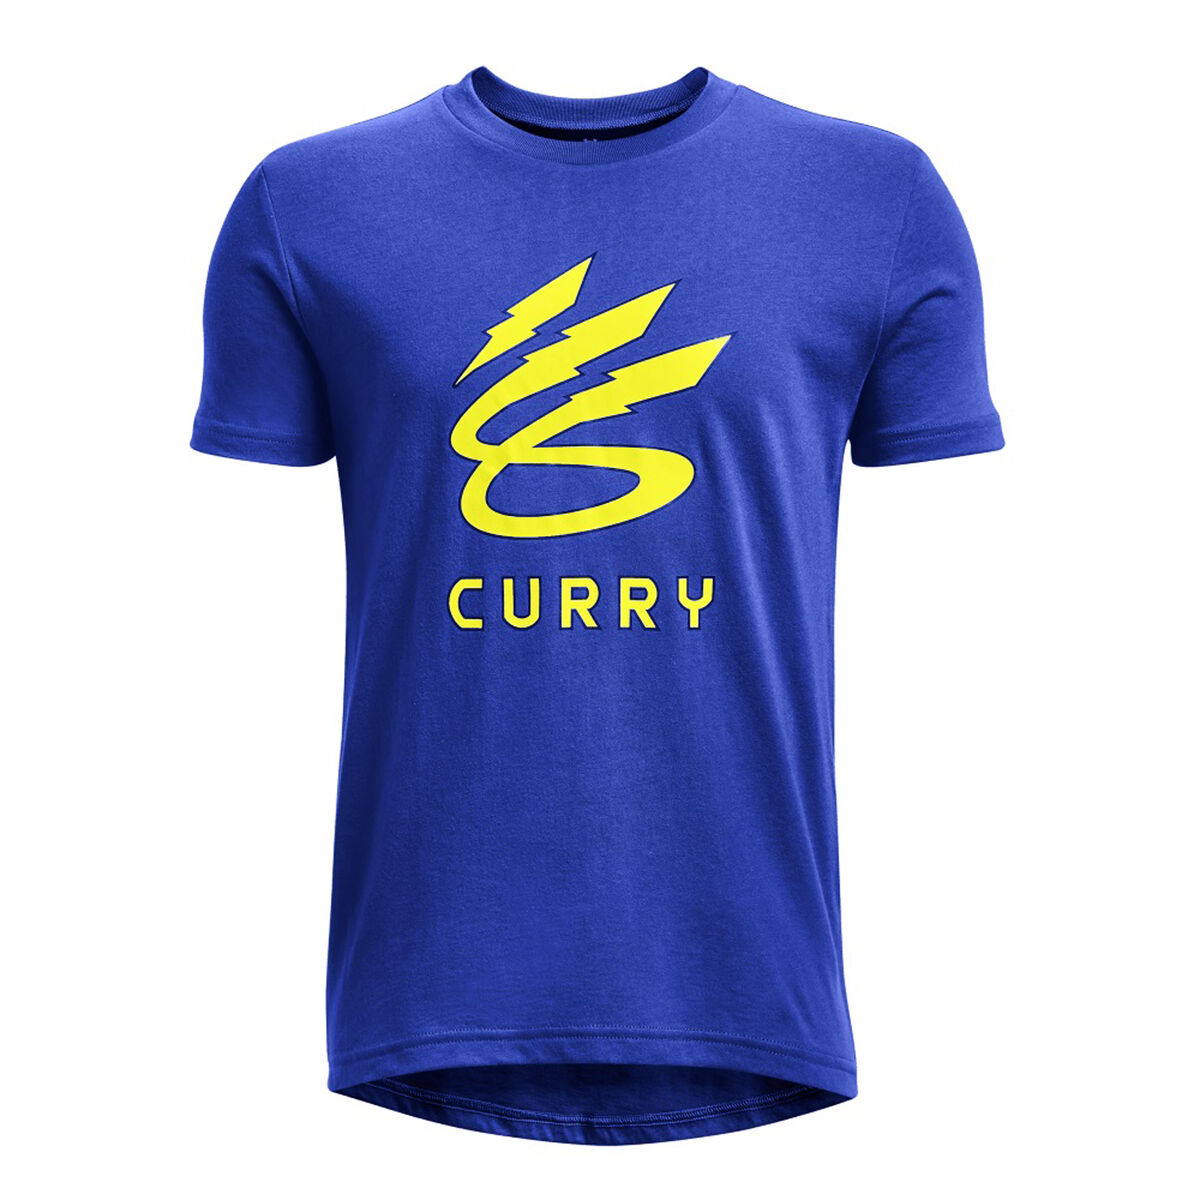 T-shirt à manches courtes homme Under Armour Curry Lightning Logo Bleu